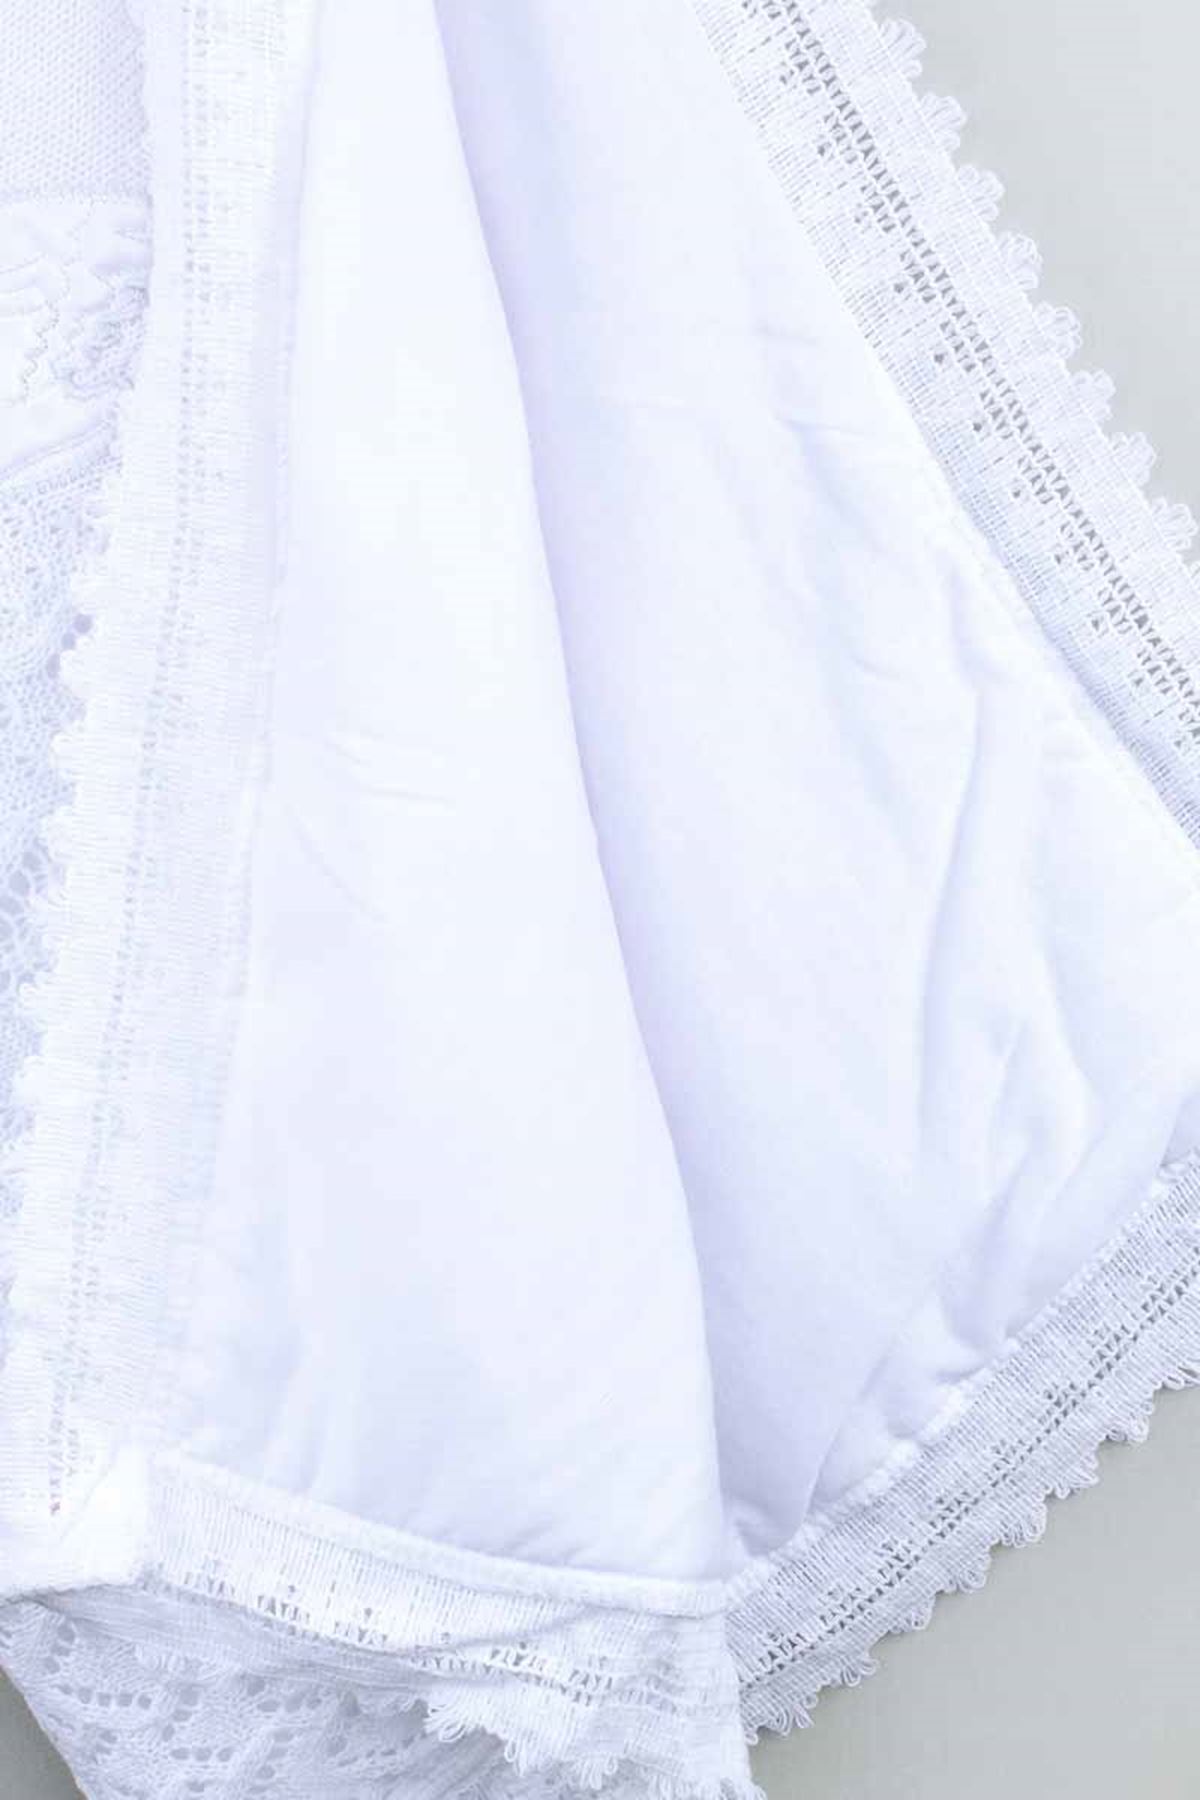 Baby Girl Boy Hand Knitted Knitwear Blankets Cotton Seasonal Unisex Swaddle Special Wool Blanket For Babies Girls Boys Models